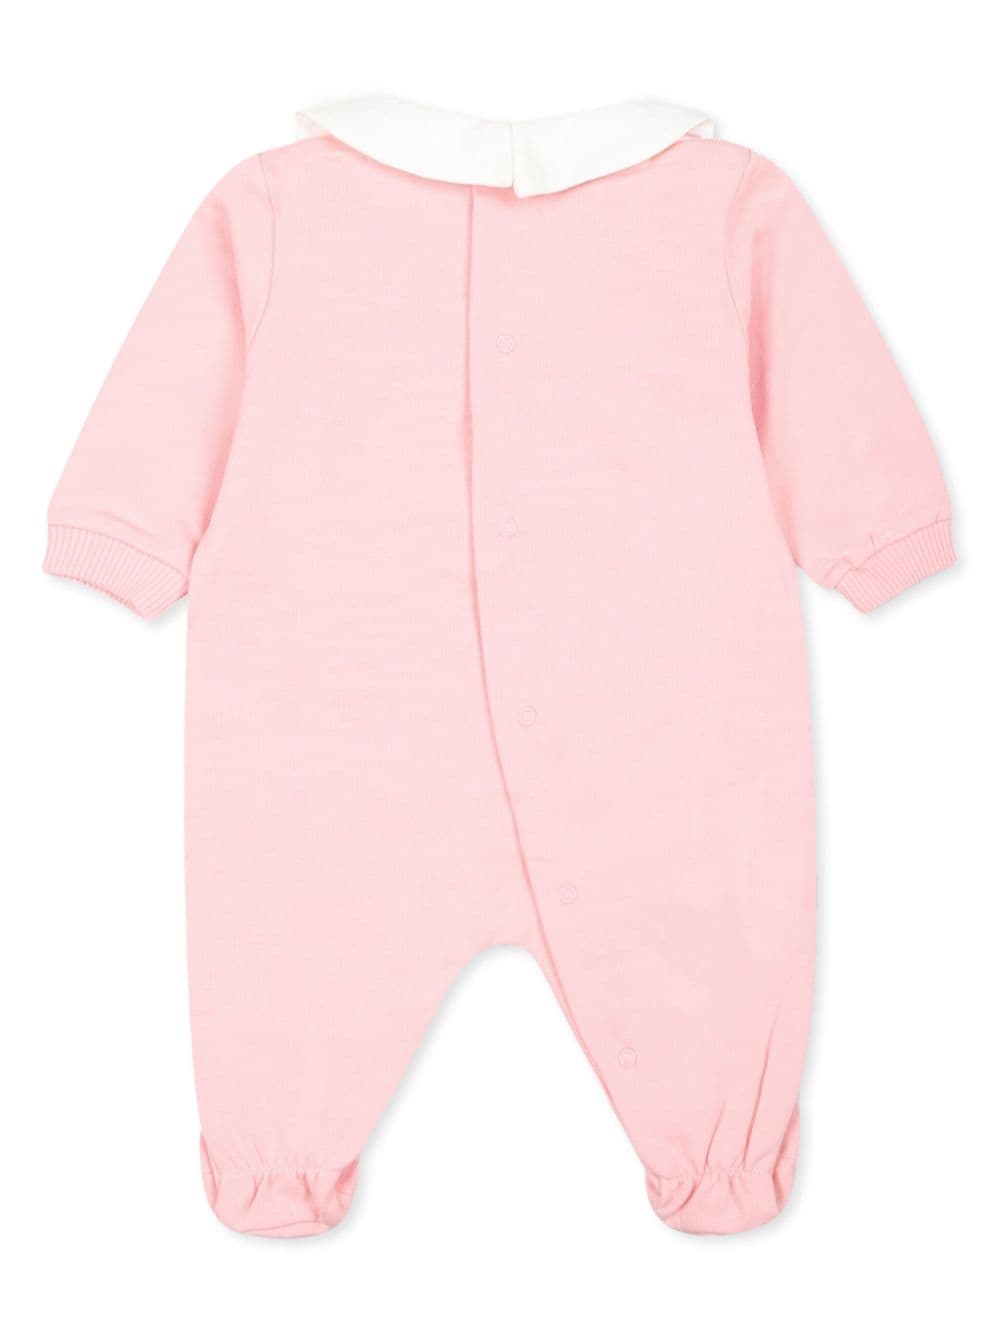 Baby girl's light pink cotton onesie